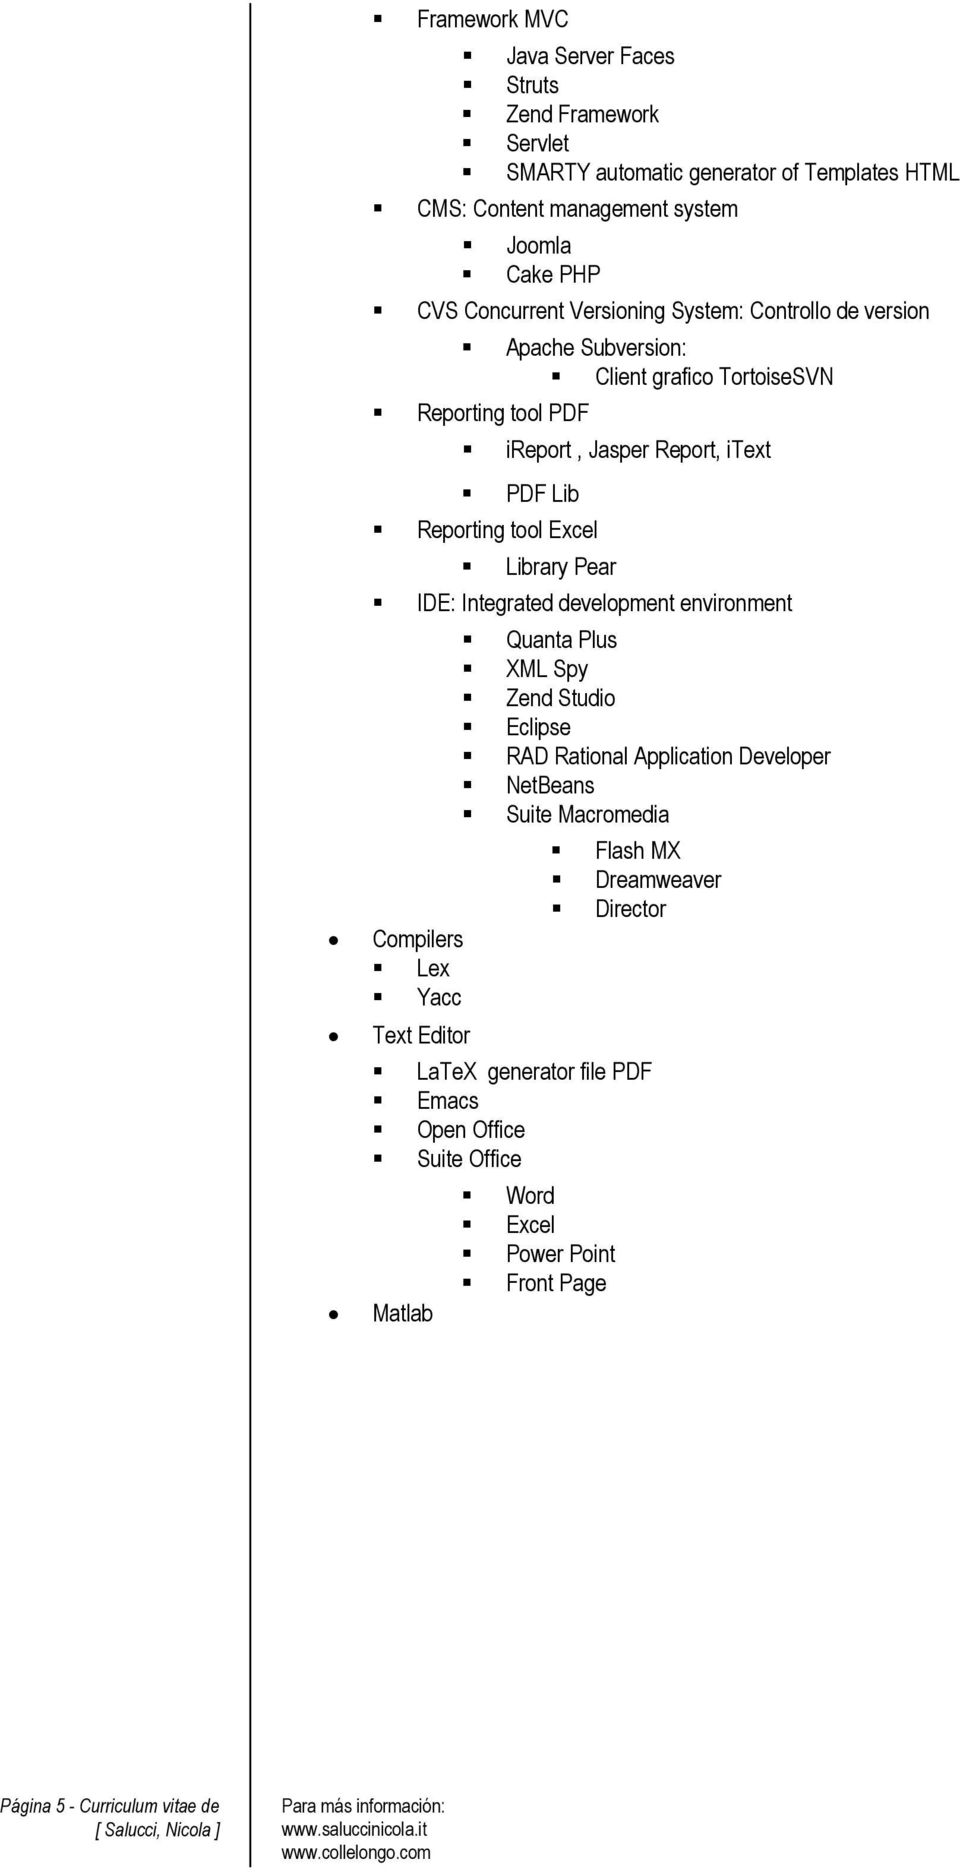 Library Pear IDE: Integrated development environment Compilers Lex Yacc Text Editor Quanta Plus XML Spy Zend Studio Eclipse RAD Rational Application Developer NetBeans